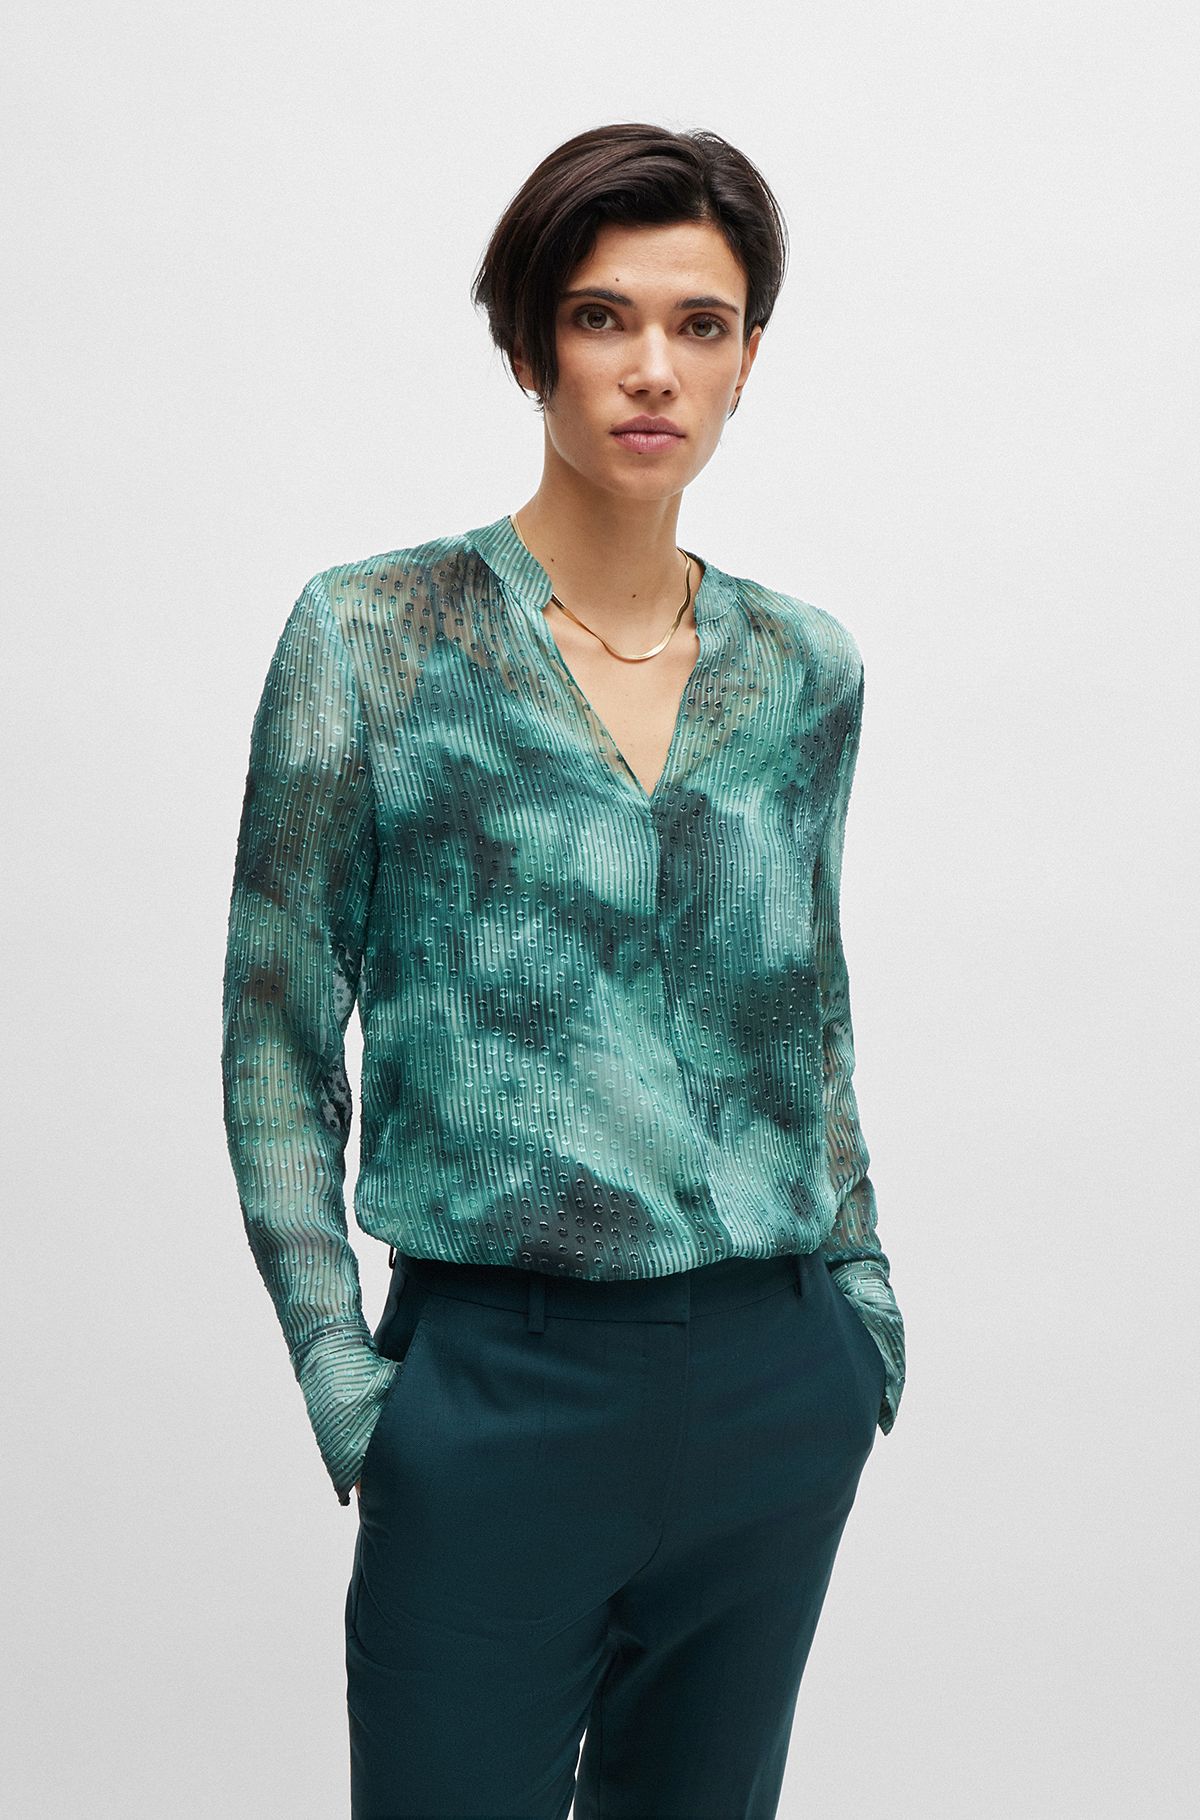 Silk-blend blouse with seasonal print, Patterned